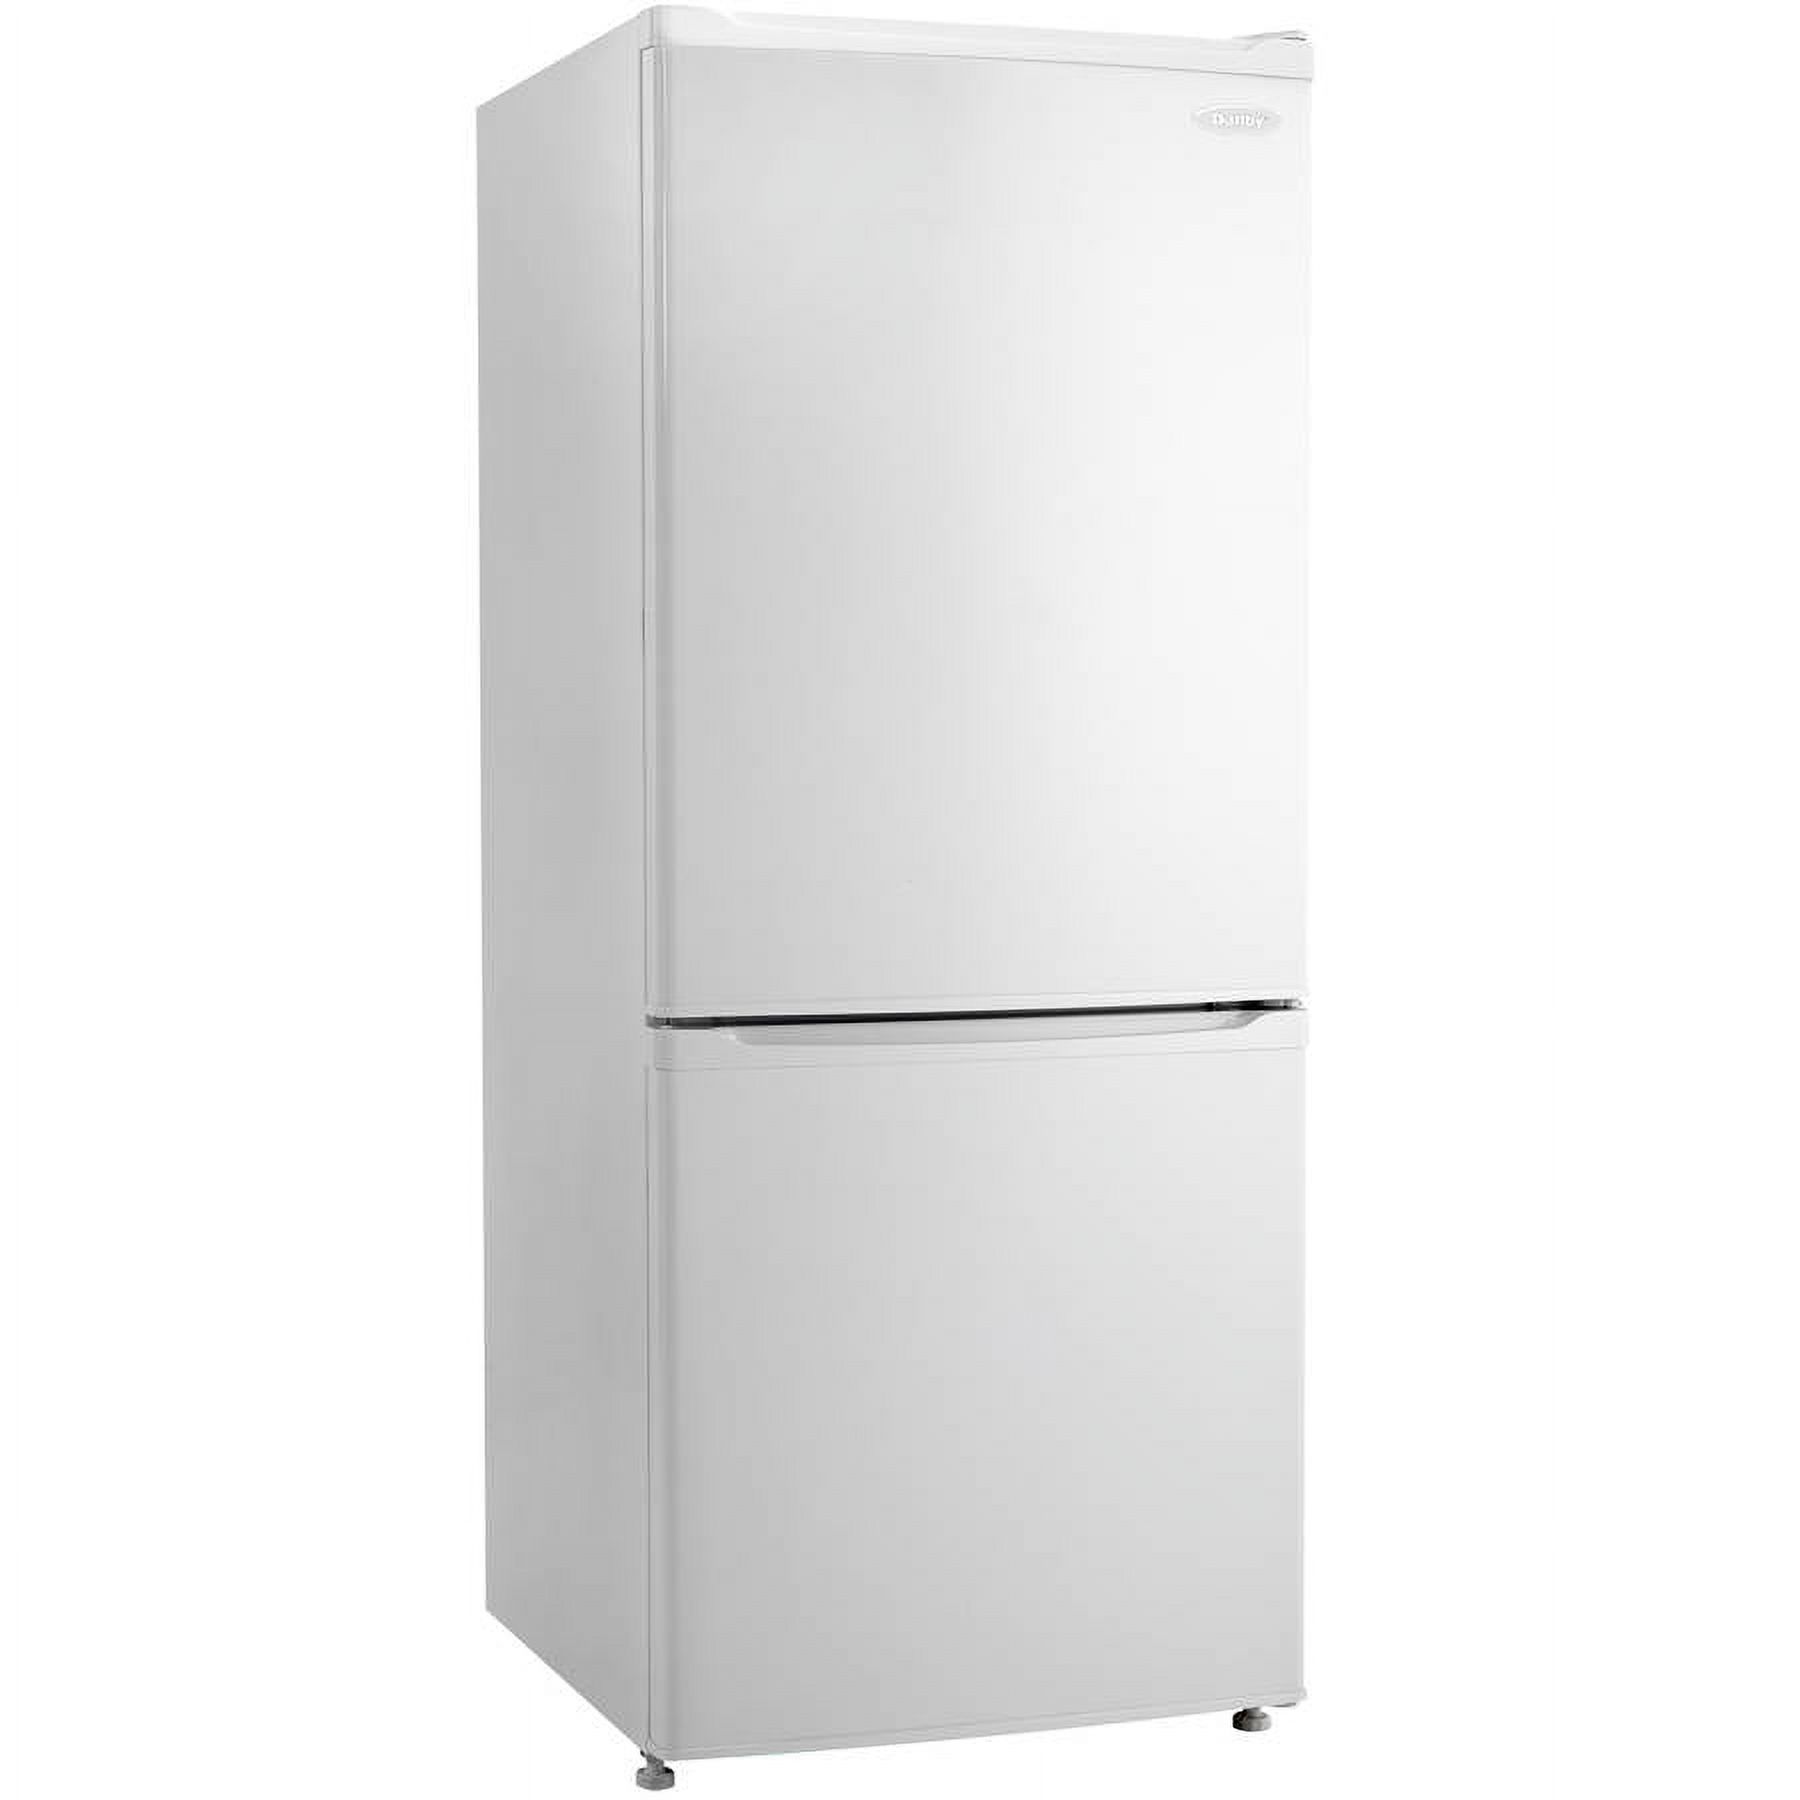 Danby 9.2 Cu Ft Bottom Mount Refrigerator, White - image 1 of 5